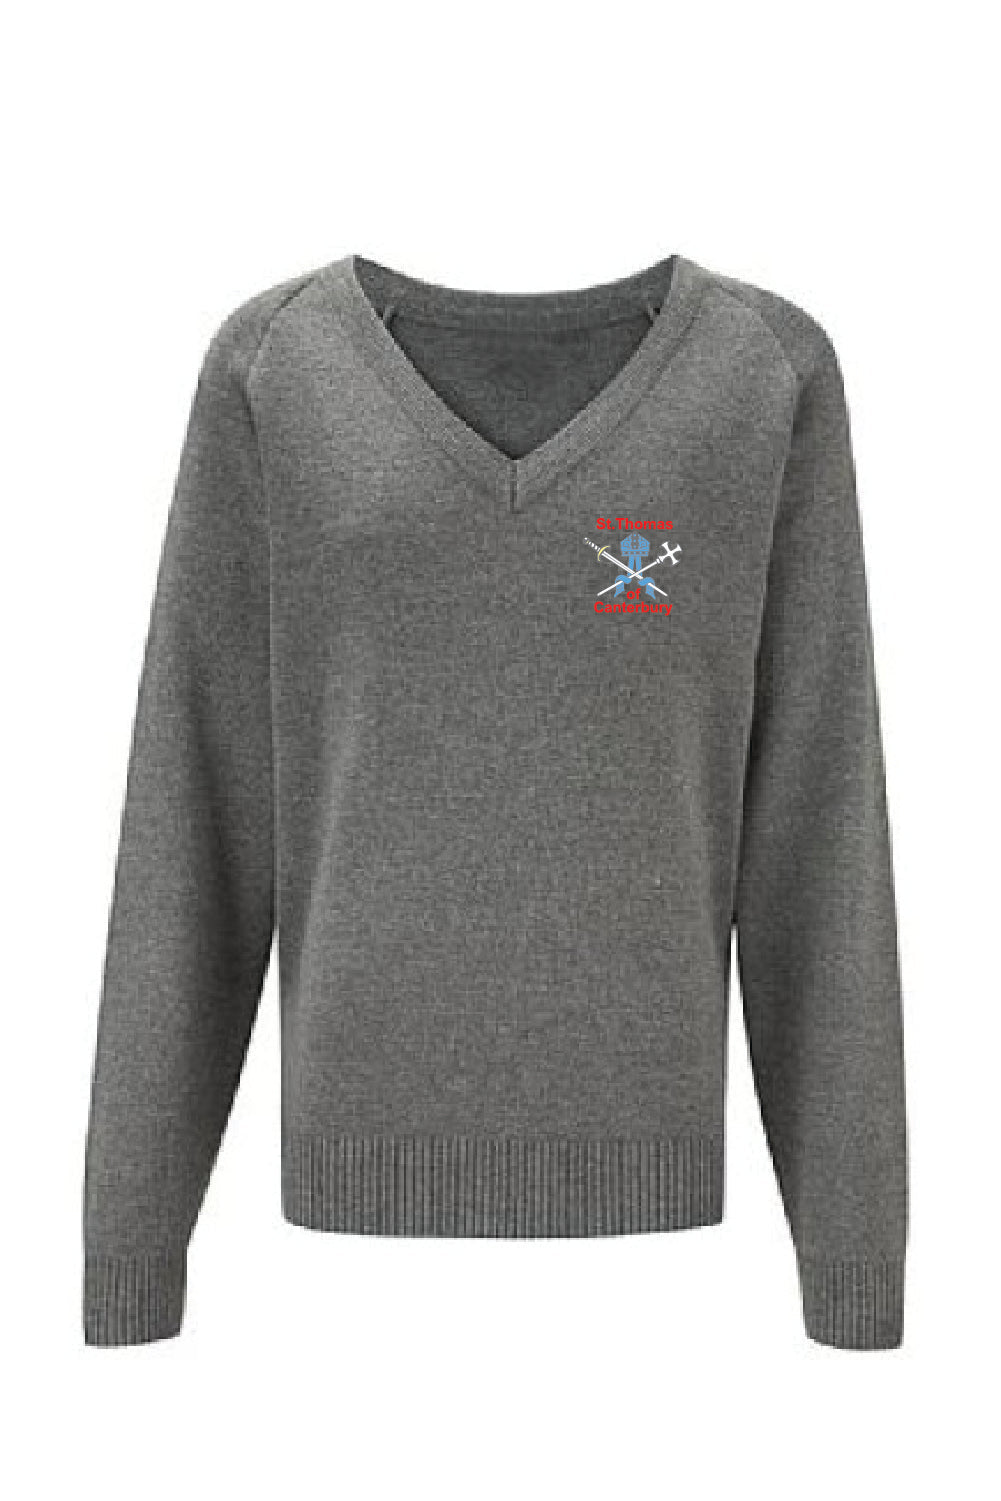 St Thomas Knitted Jumper - Uniformwise Schoolwear